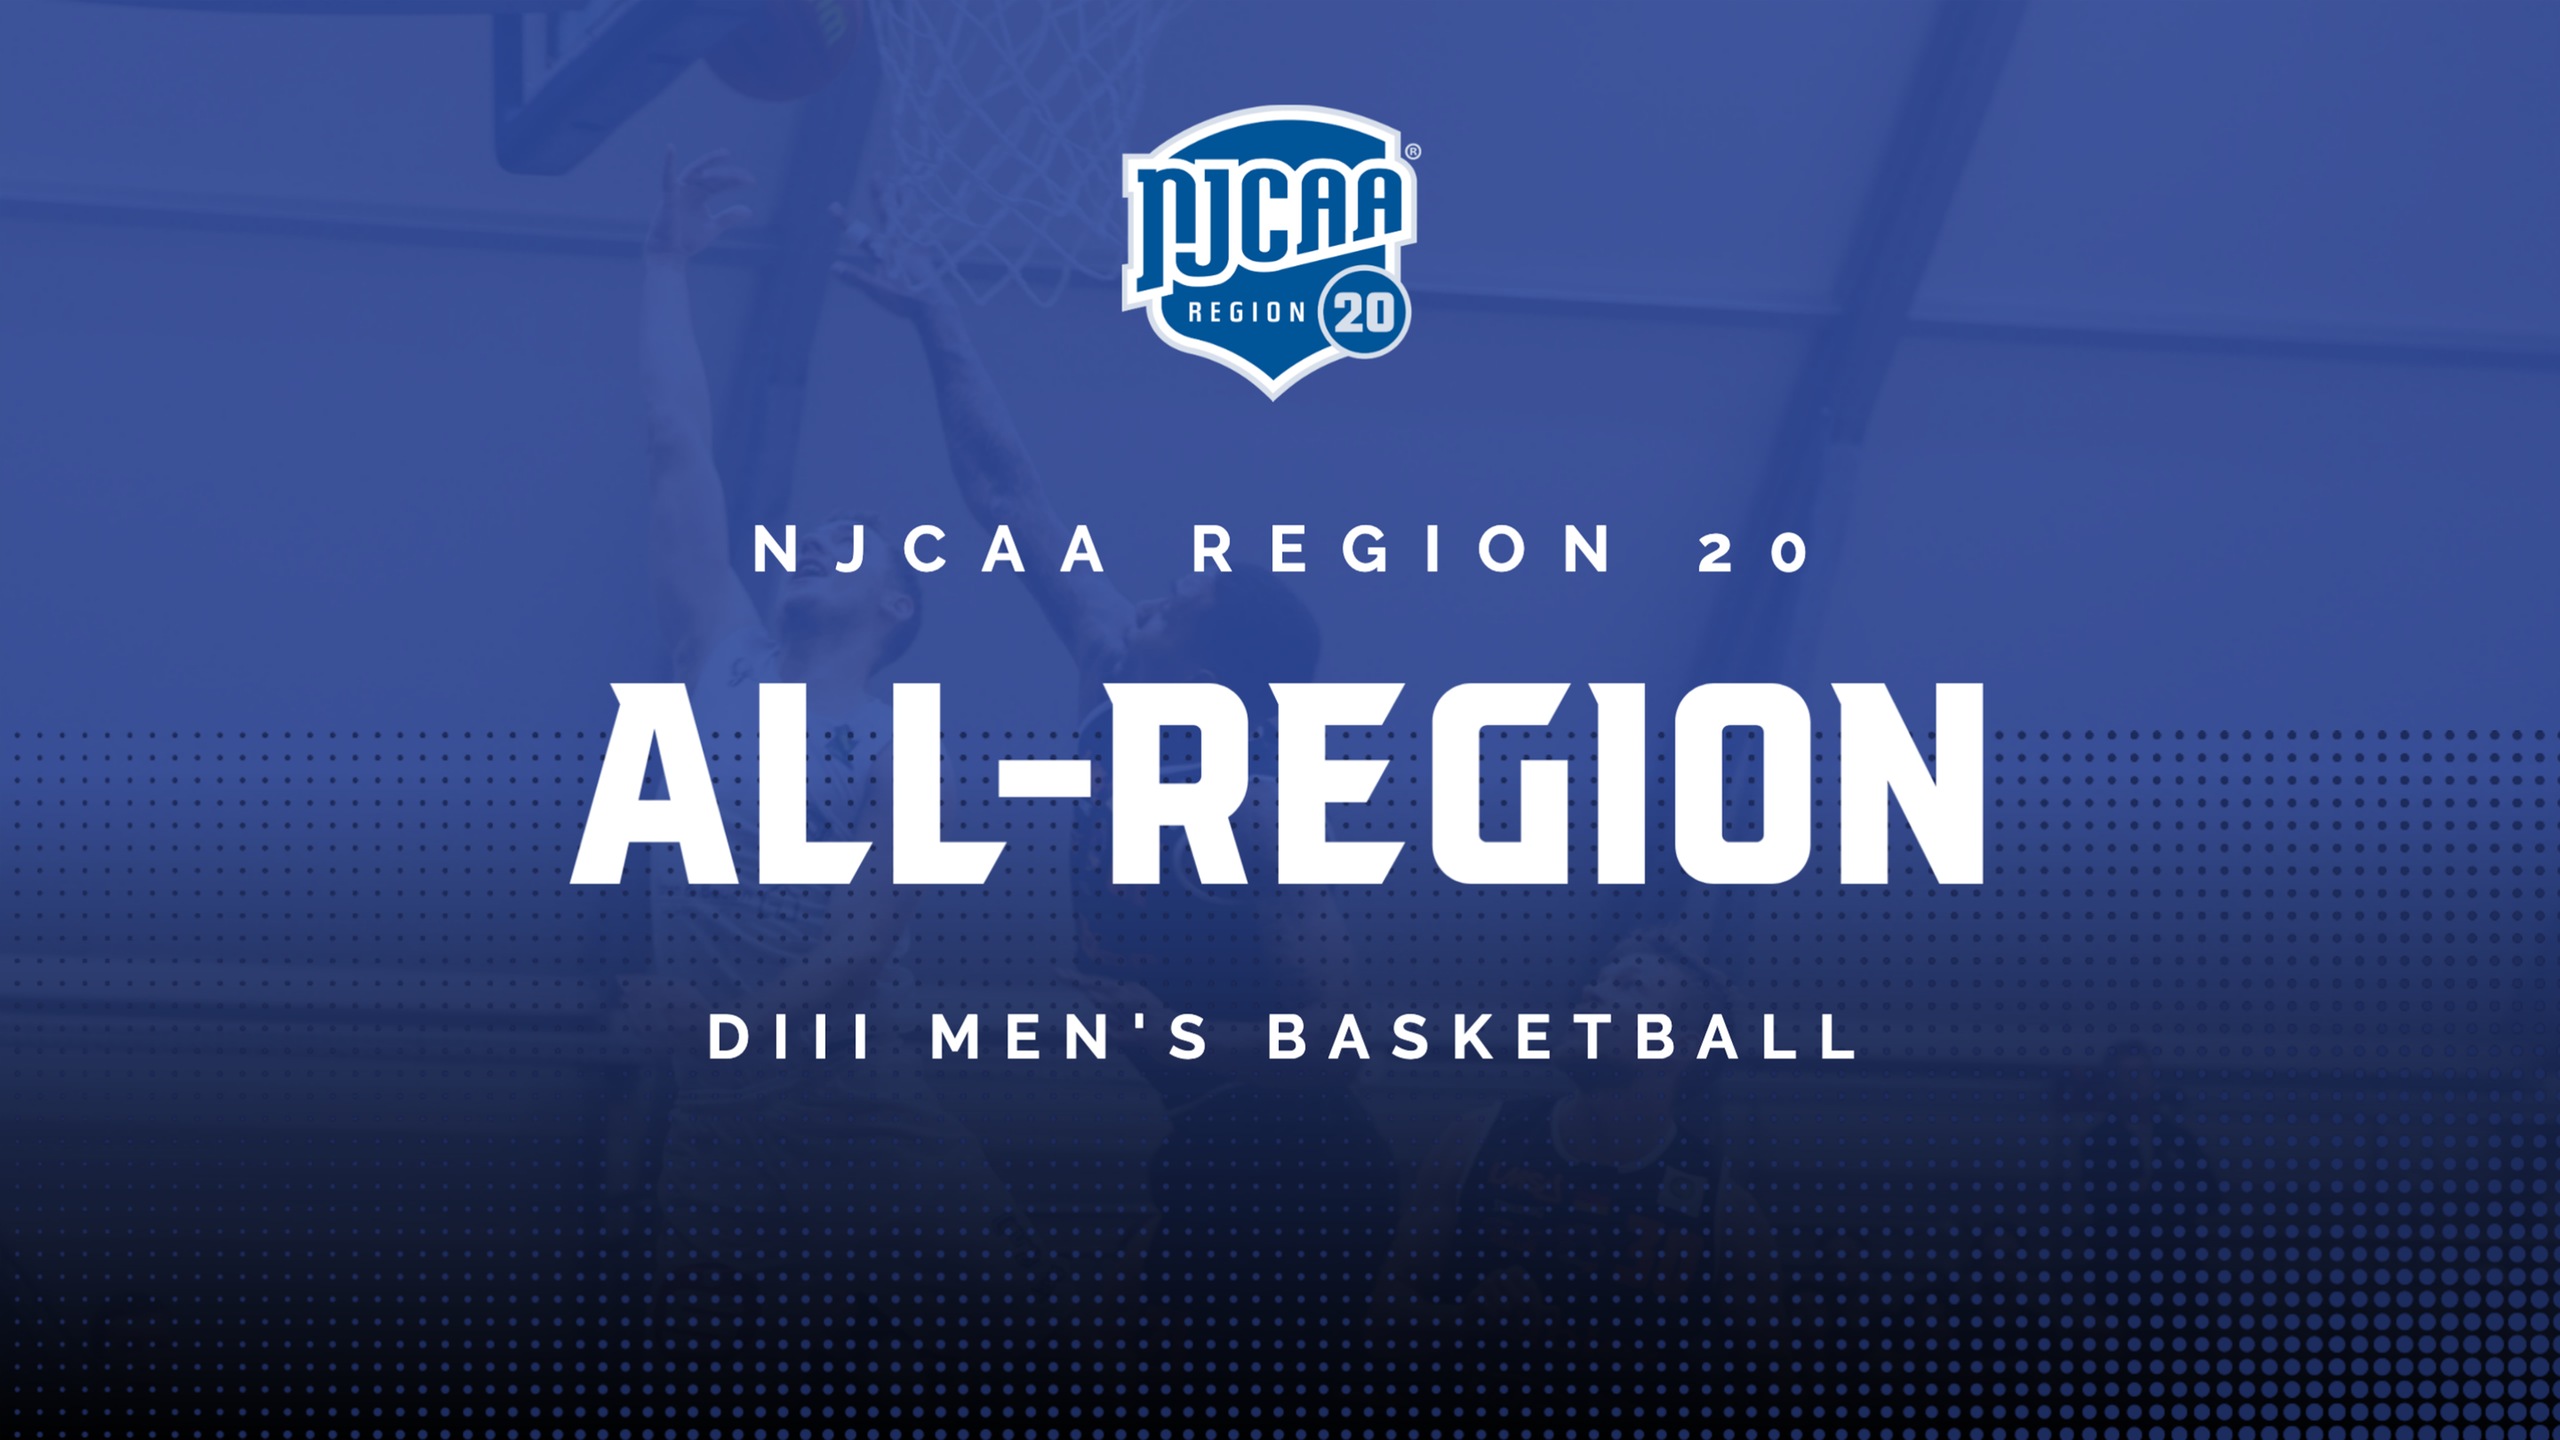 Region 20 Announces DIII Men's Basketball All-Region Teams